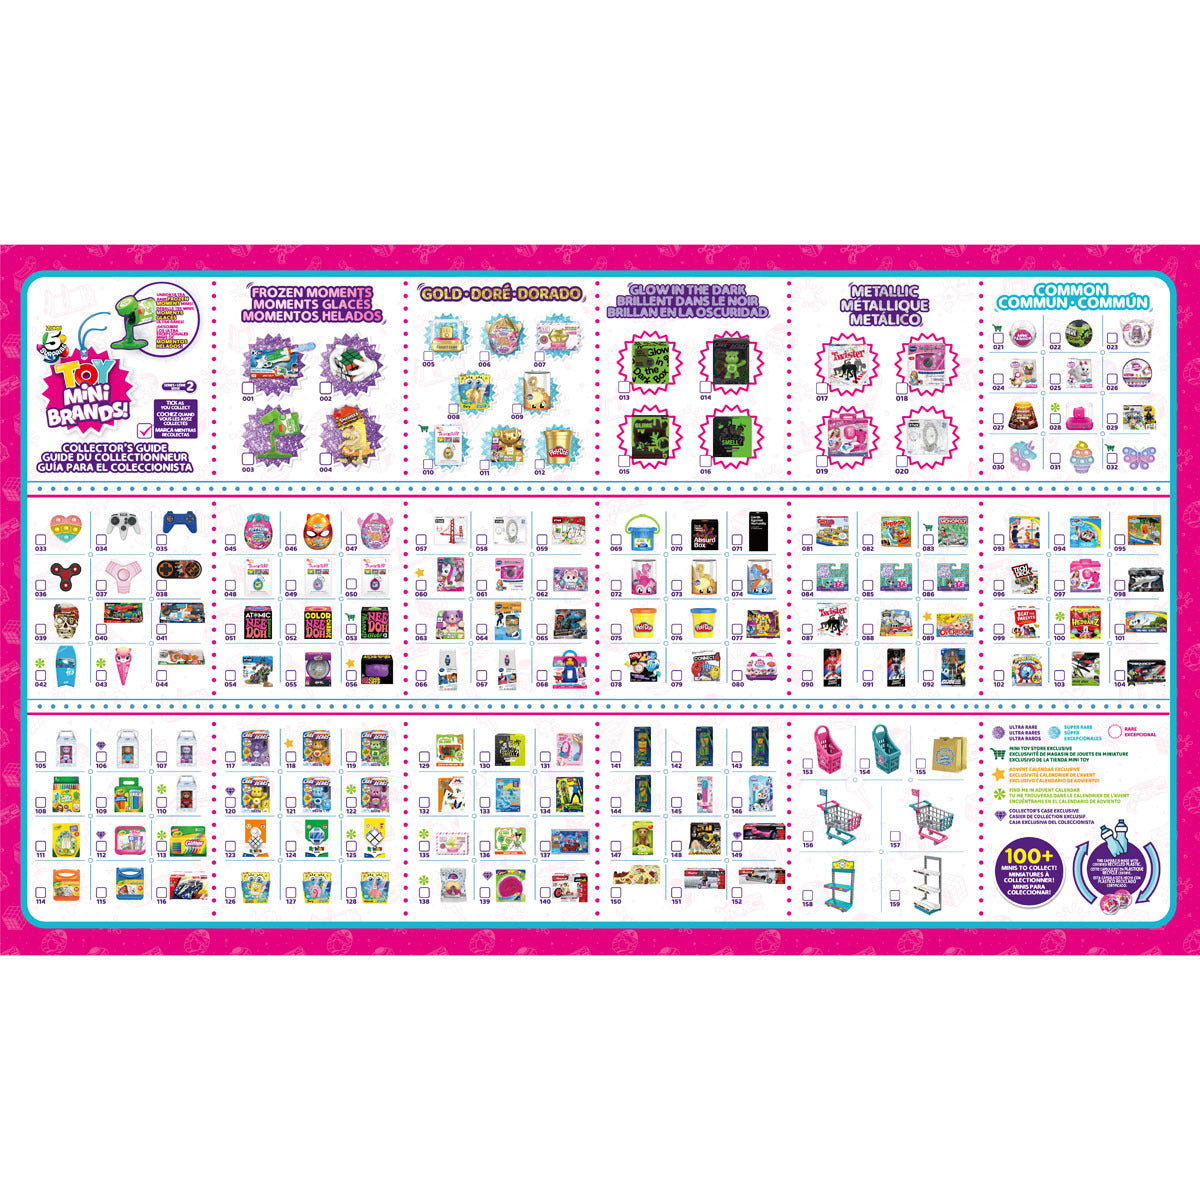 5 Surprise Toy Mini Brands Toy Shop Playset Series 2 by ZURU – The